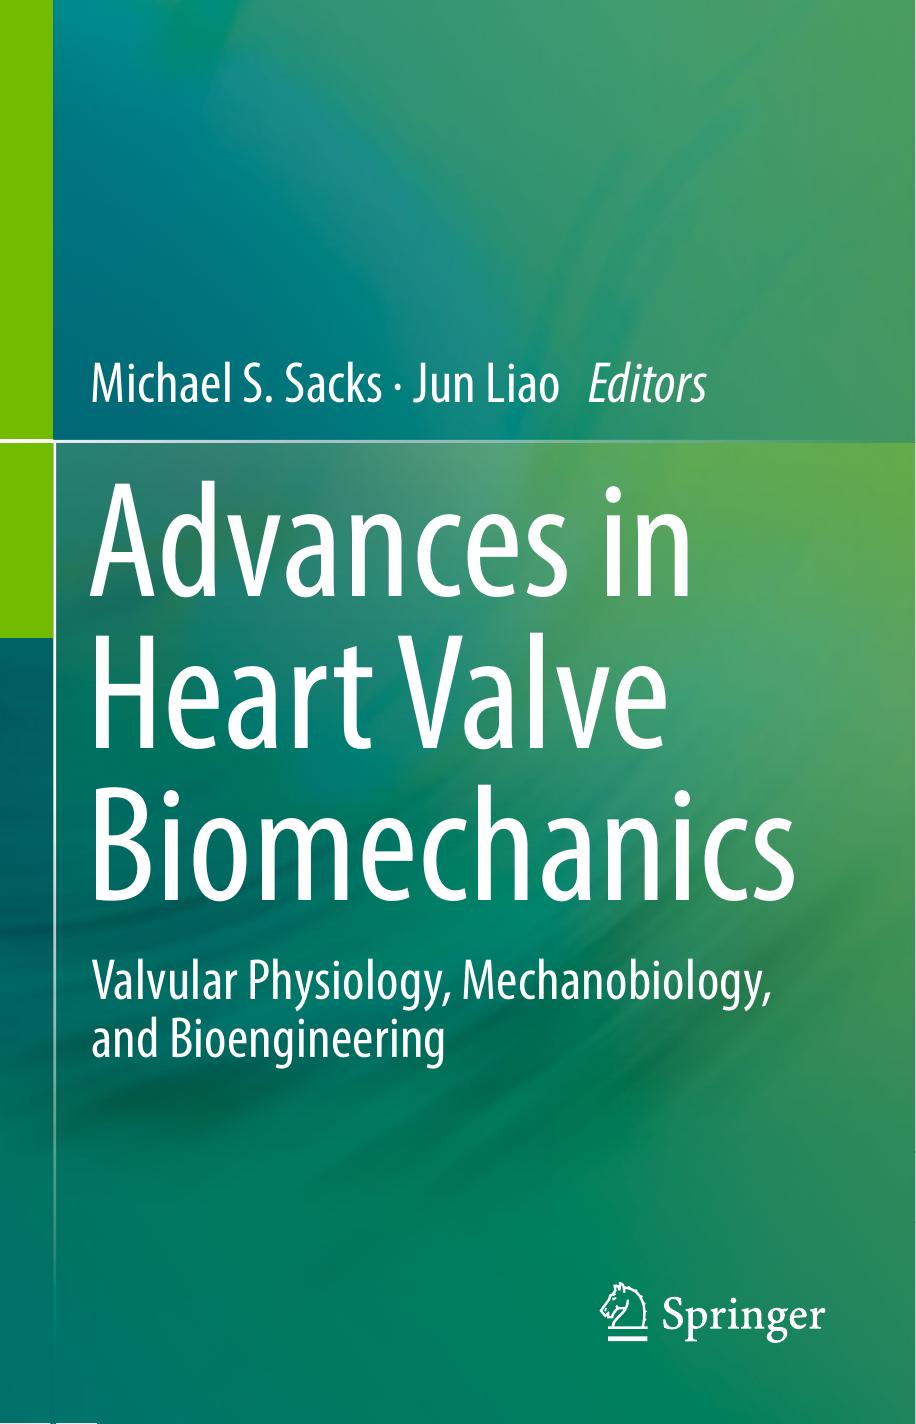 Advances in Heart Valve Biomechanic 2018